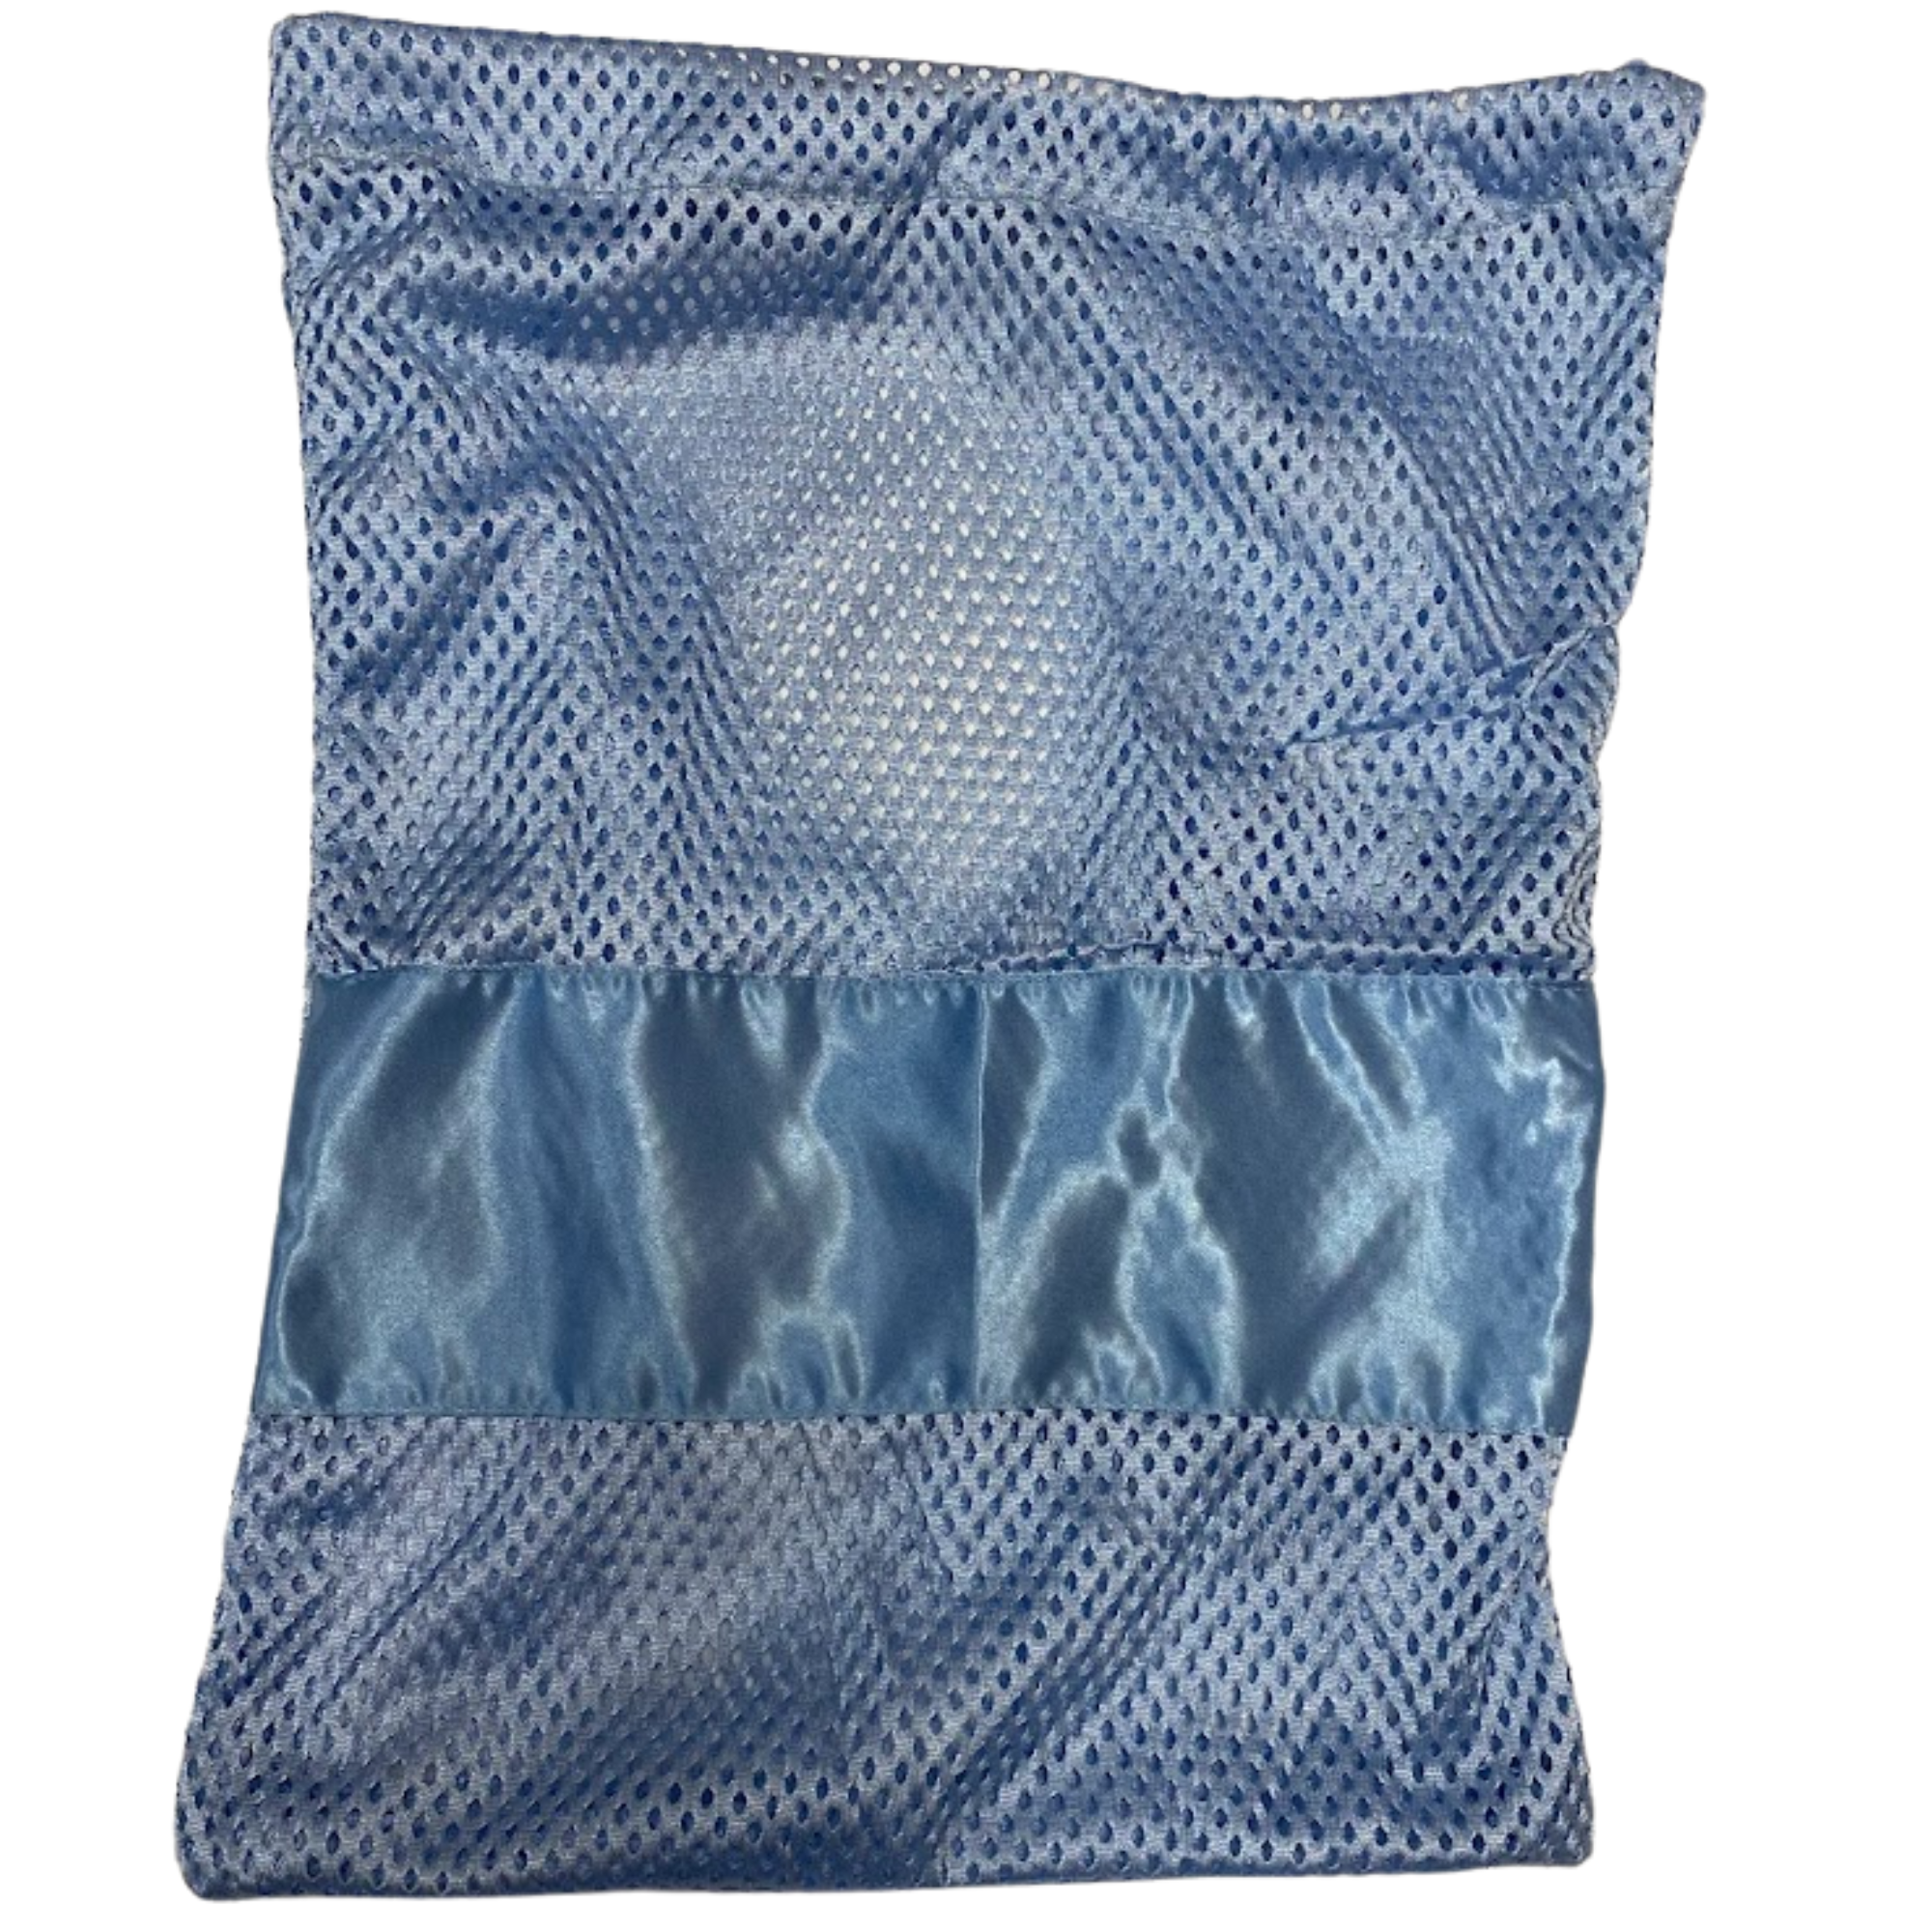 Large Nylon Mesh drawstring Pointe Bag Pillowcase Baby Blue